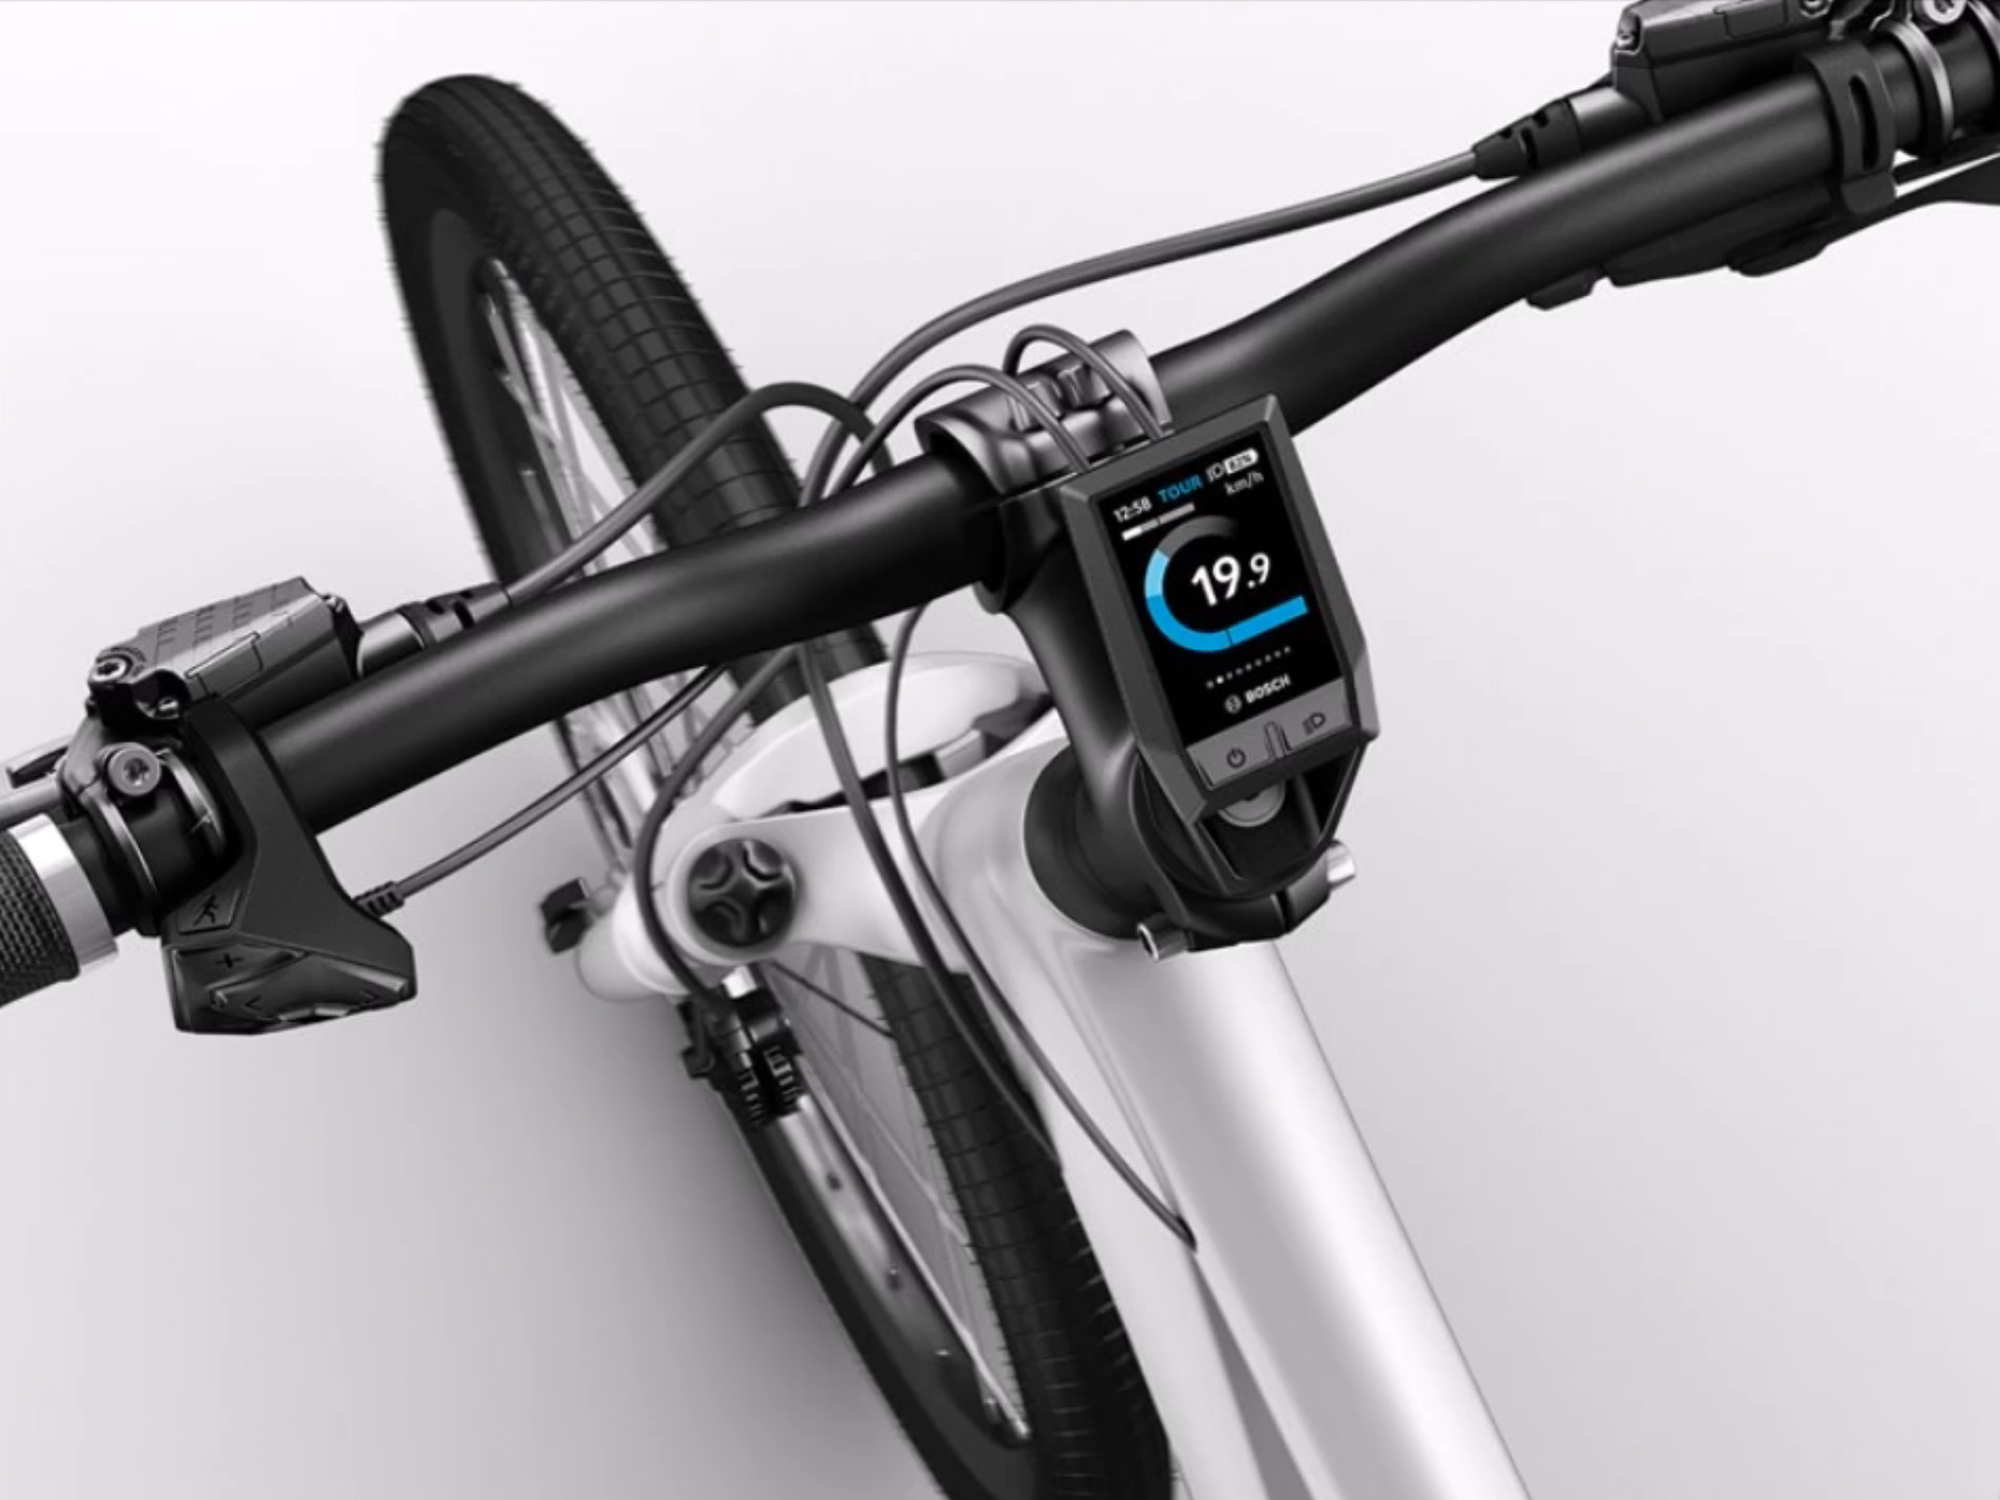 Bosch Kiox Electric Bike Display Details